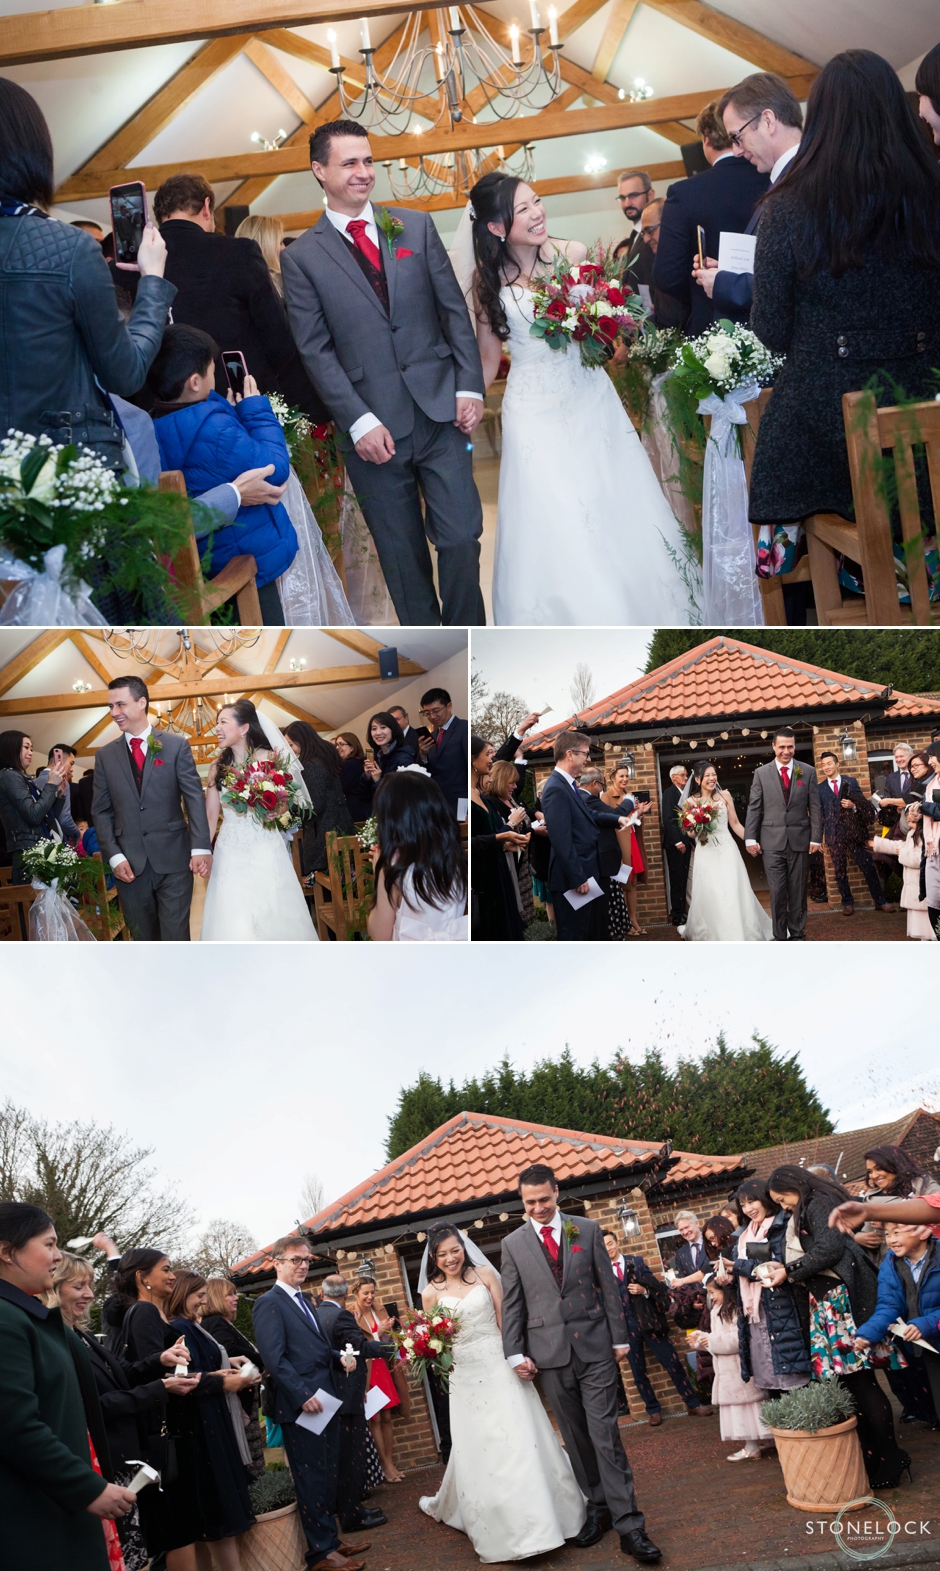 Oaks Farm, Croydon, Surrey, Winter wedding photography 